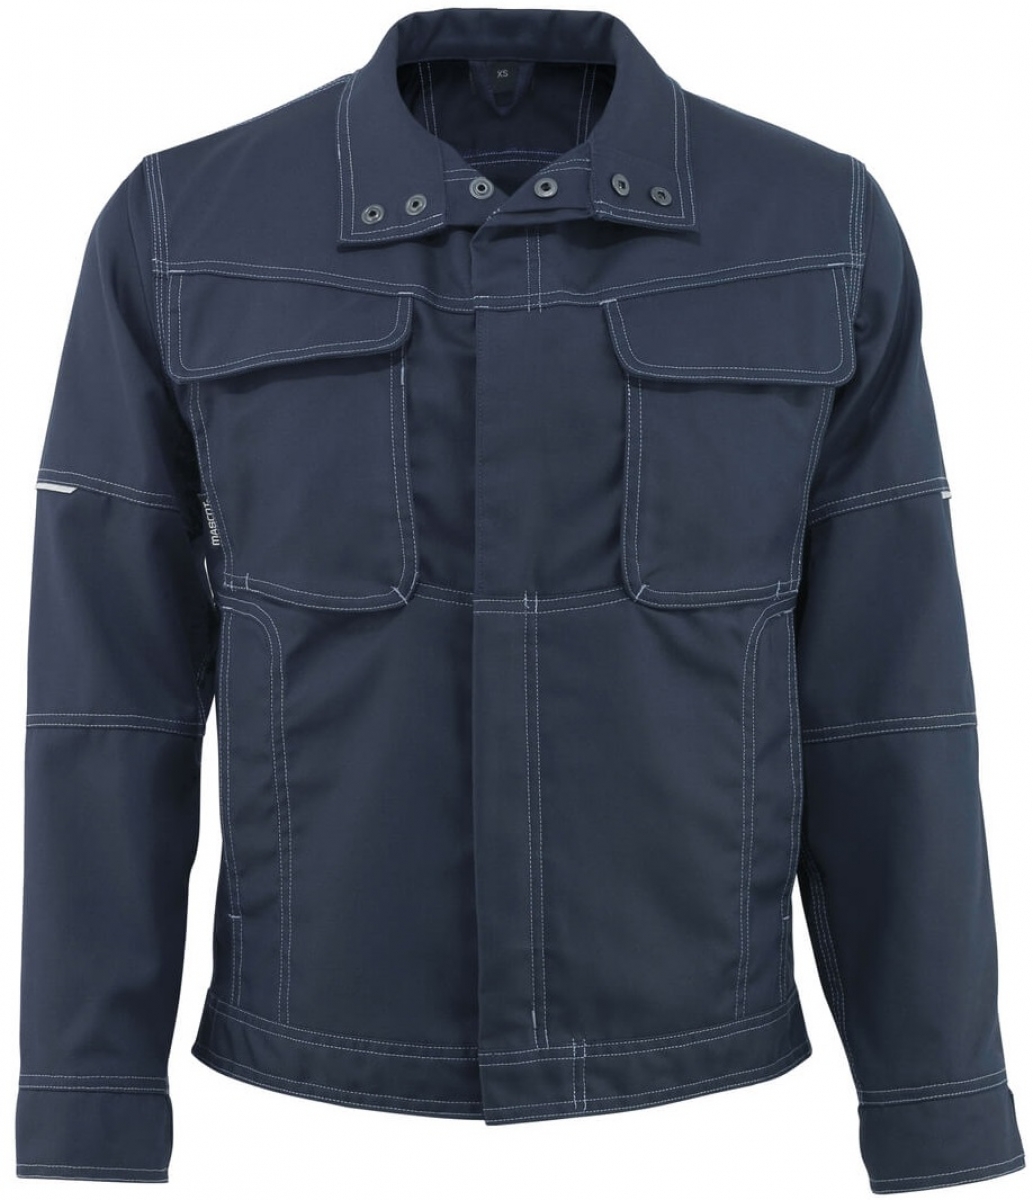 MASCOT-Workwear, Arbeits-Berufs-Arbeits-Jacke, Tulsa, 260 g/m, schwarzblau